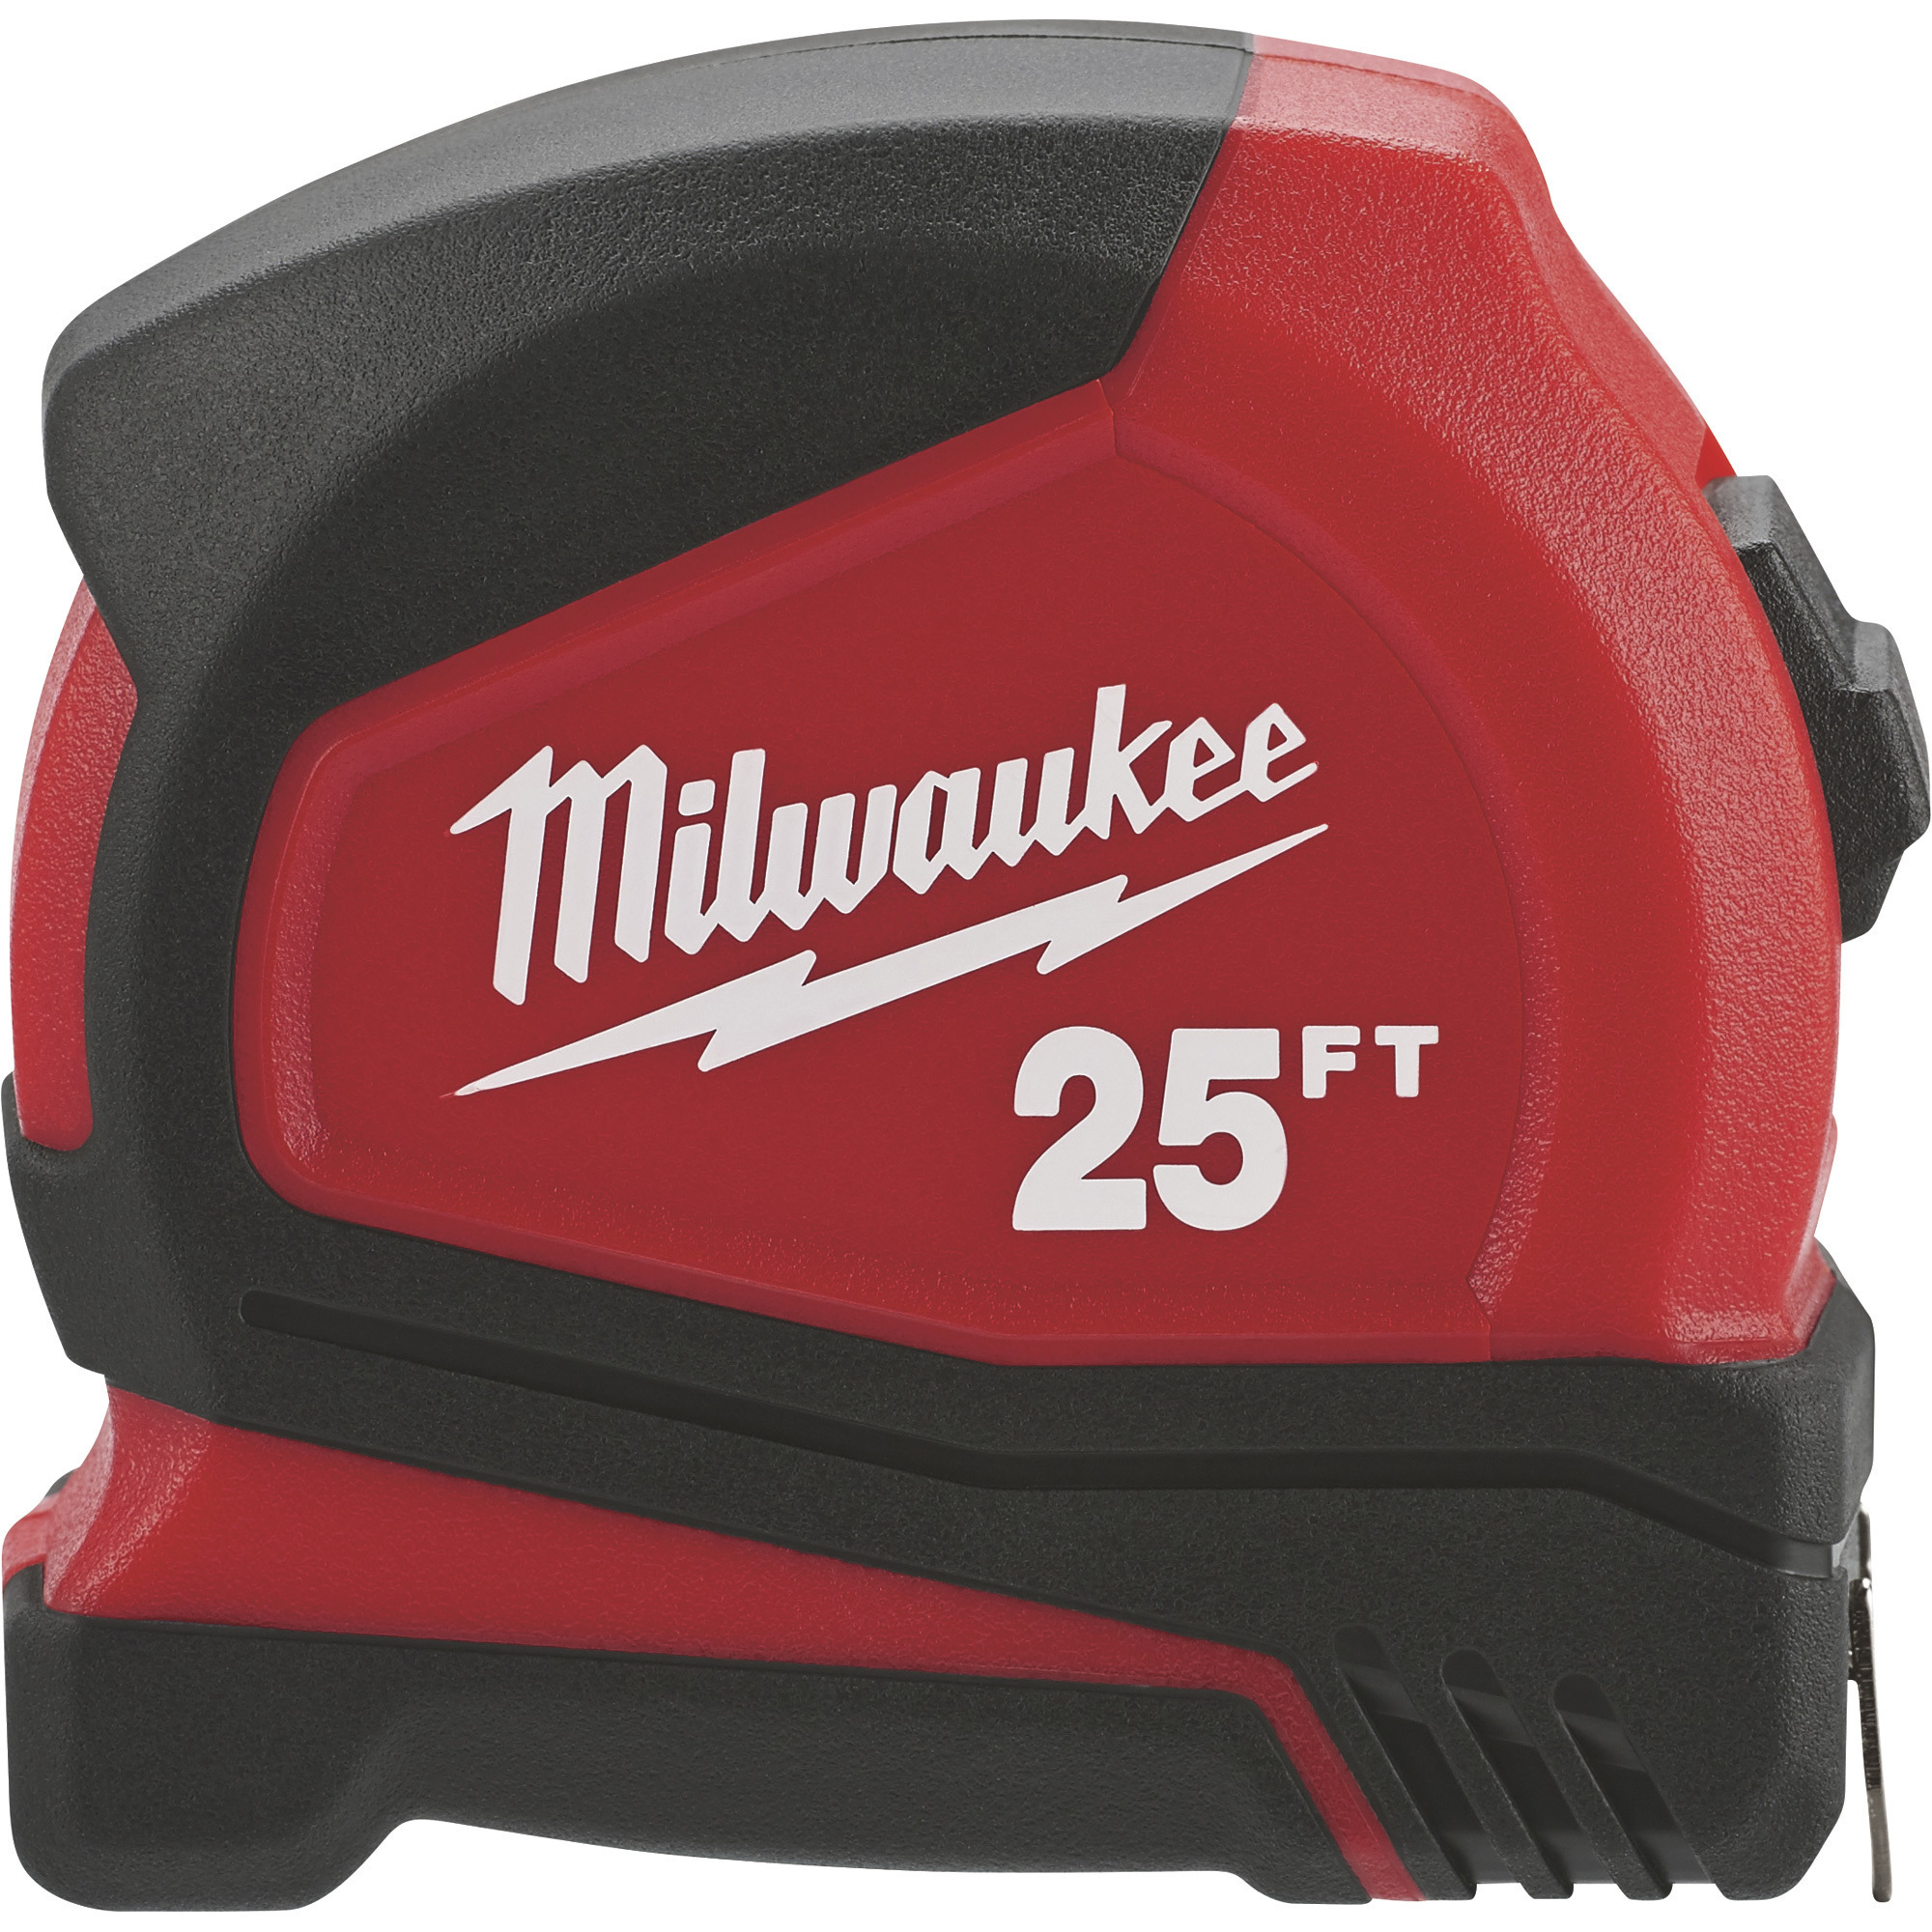 Milwaukee 25Ft. Compact Tape Measure, Model 48-22-6625